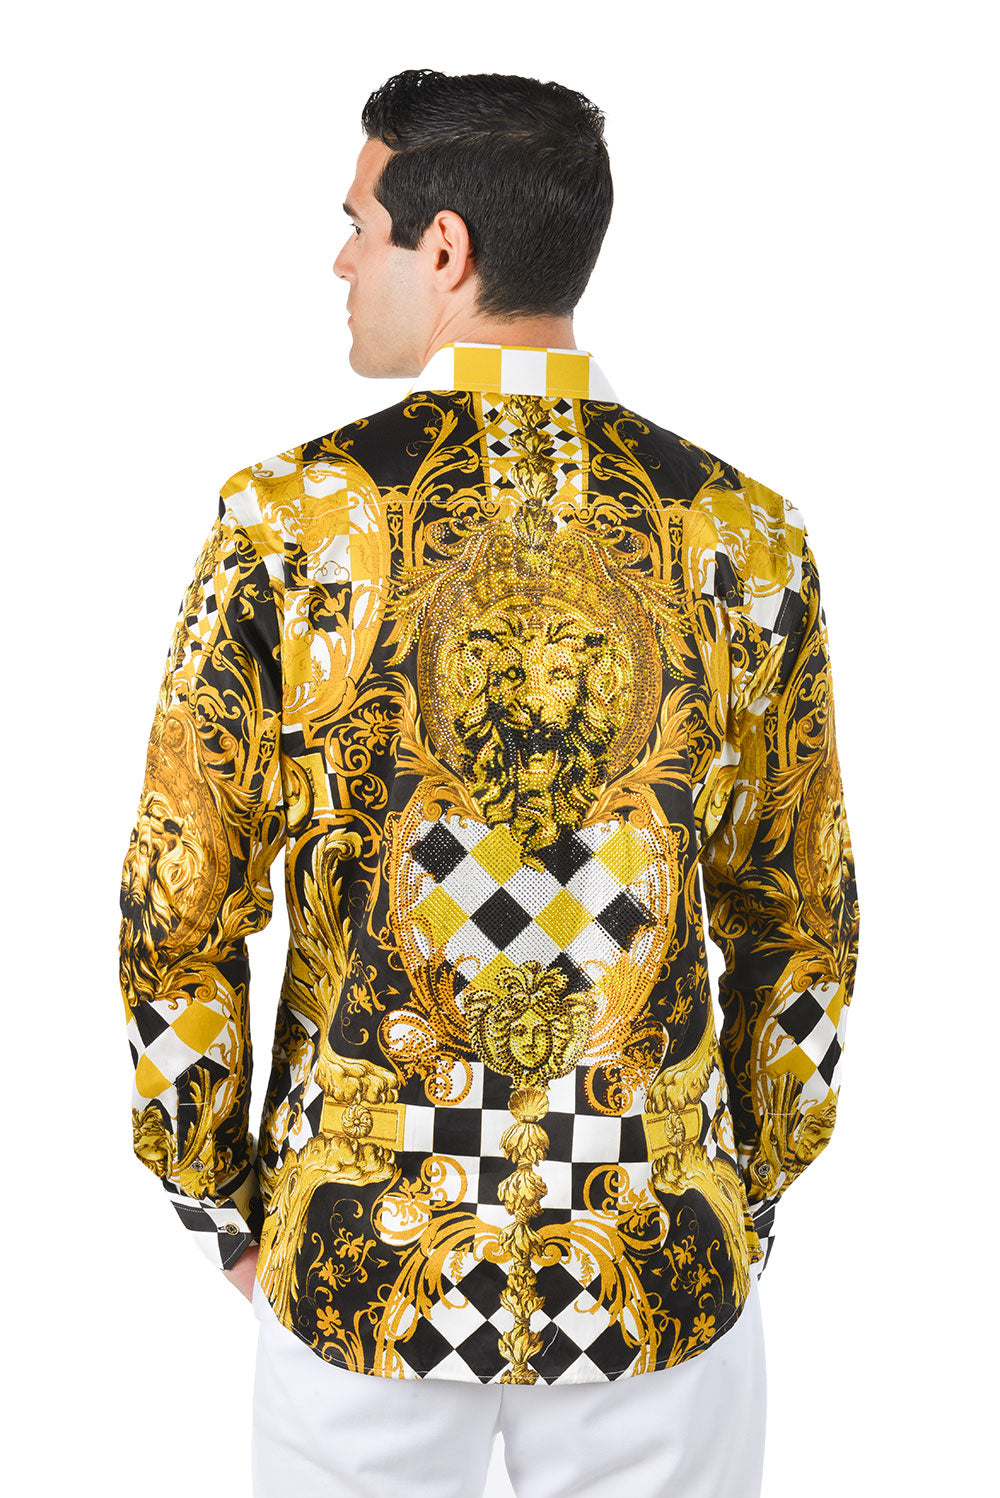 BARABAS Men's Rhinestone Medusa Checkered Lion Button Down Shirt SPR20 Black Gold